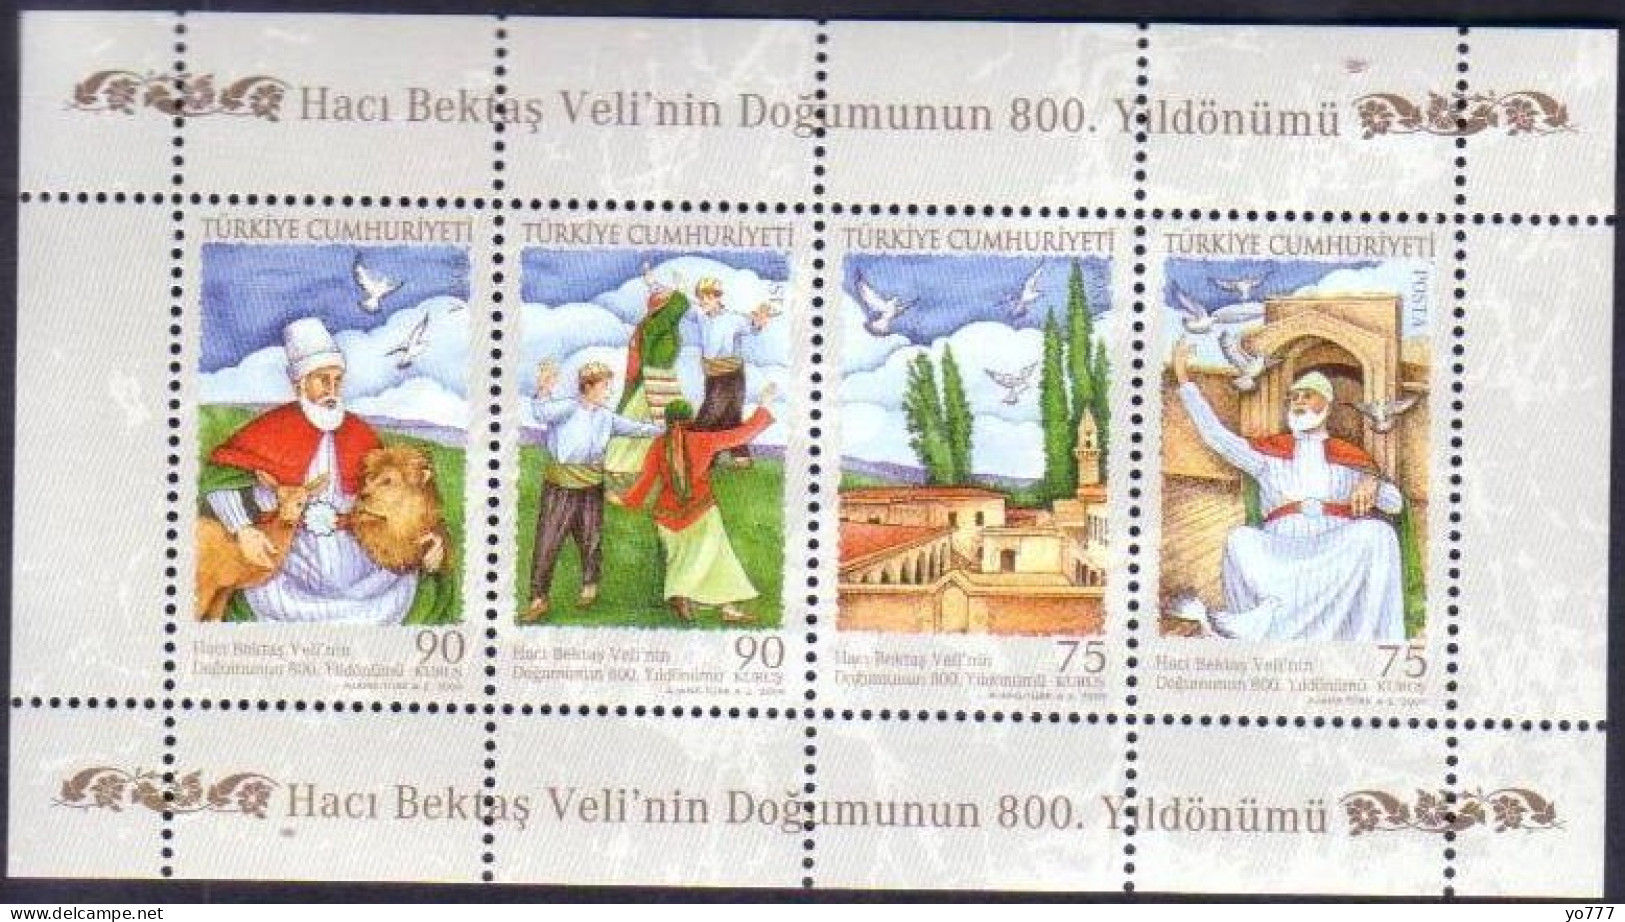 (3773-76) TURKEY 800th ANNIVERSARY OF THE BIRTH OF HACI BEKTAS VELI SOUVENIR SHEET MNH** - Unused Stamps